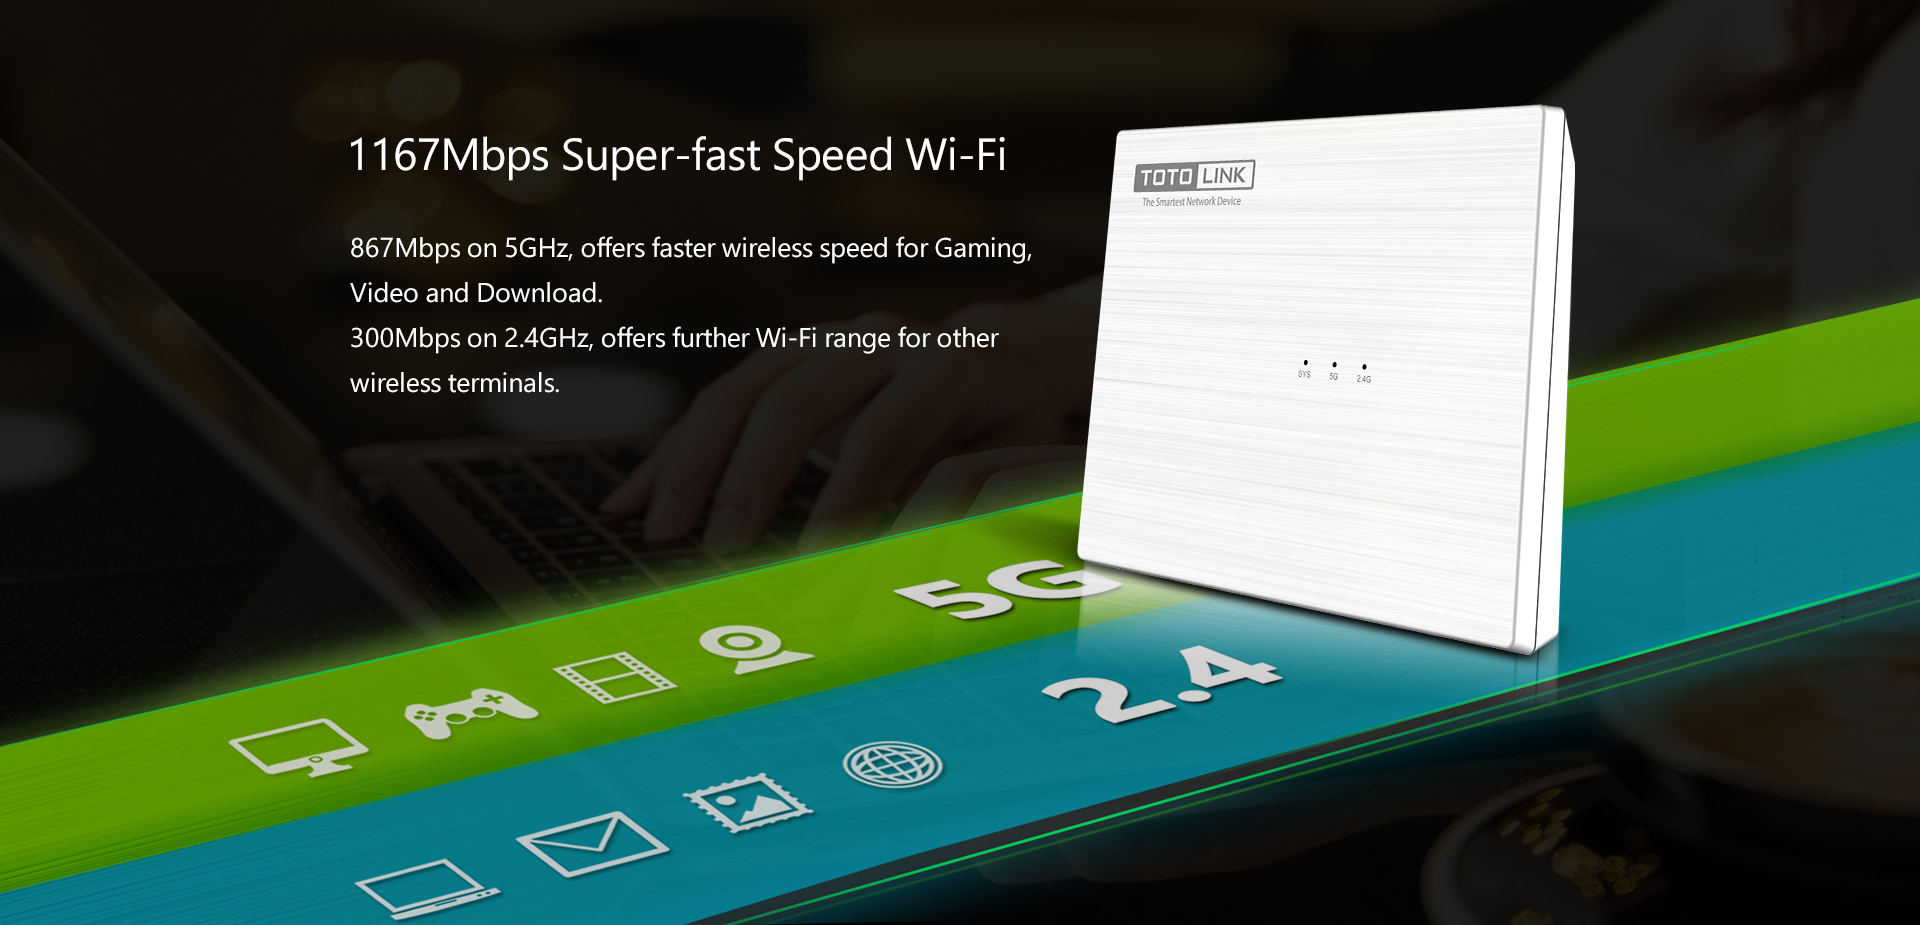 1167Mbps  Super Speed Wi-Fi